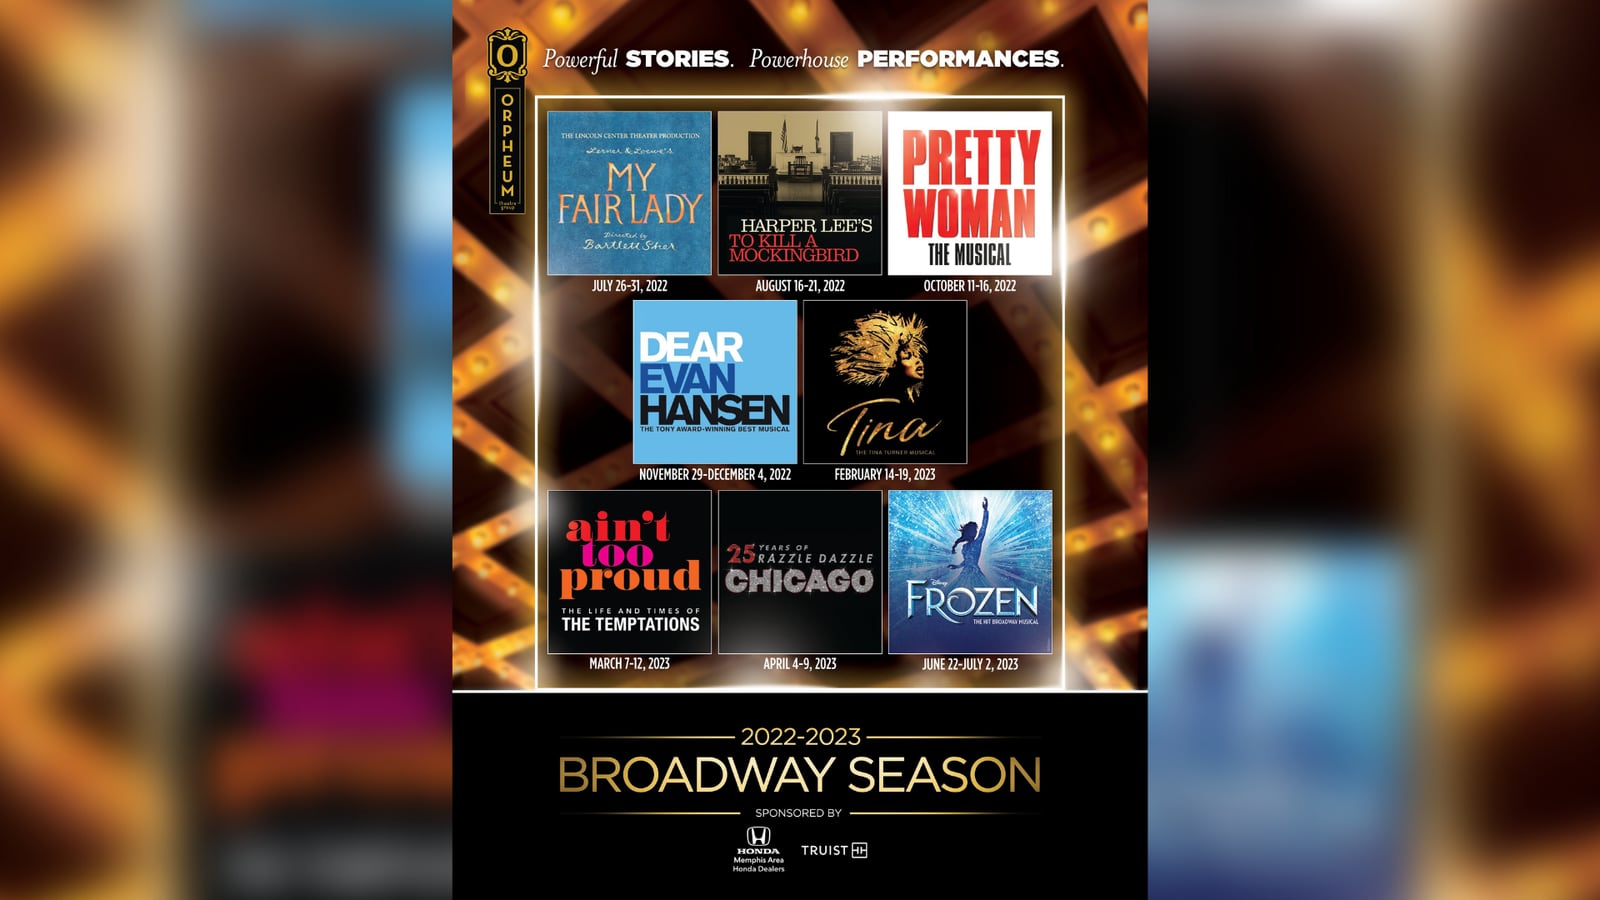 Orpheum Theatre announces 20222023 Broadway Season FOX13 News Memphis